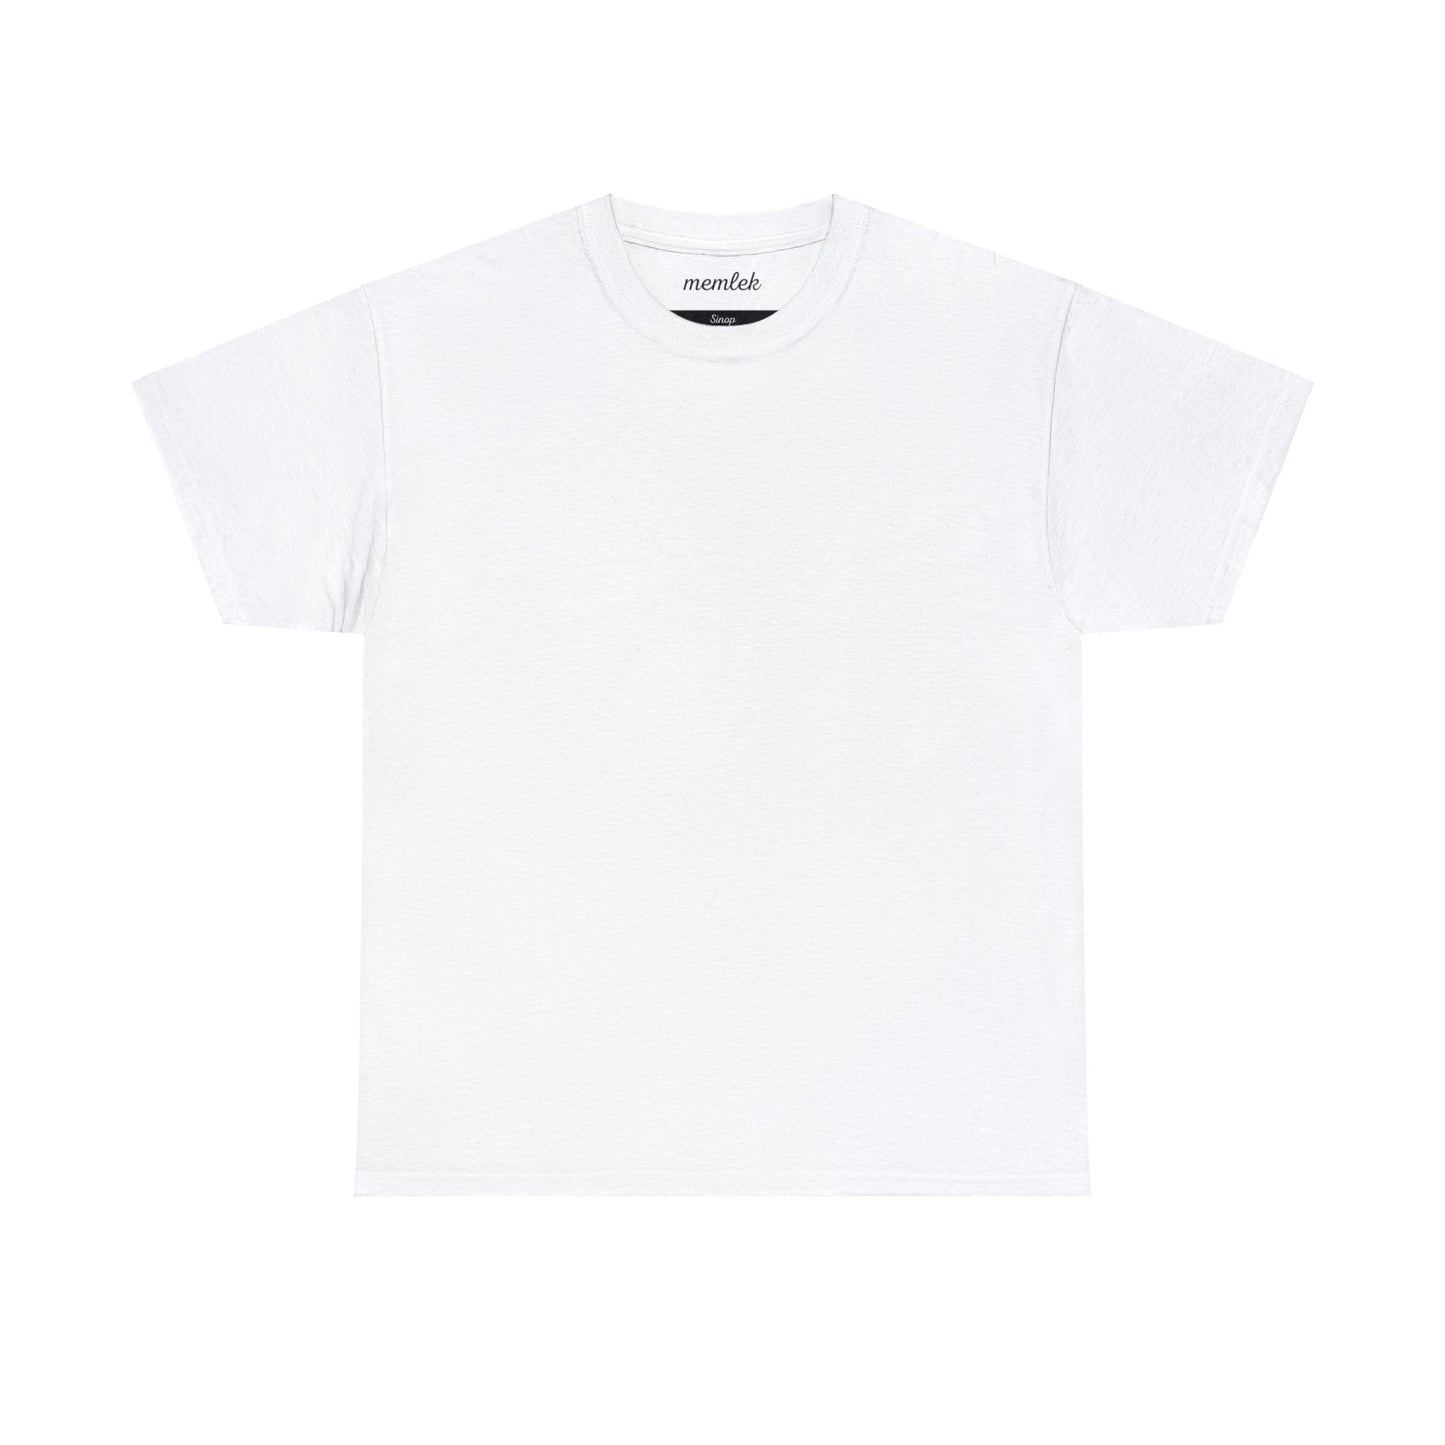 Kurt - 57 Sinop - T-Shirt - Back Print - Black/White